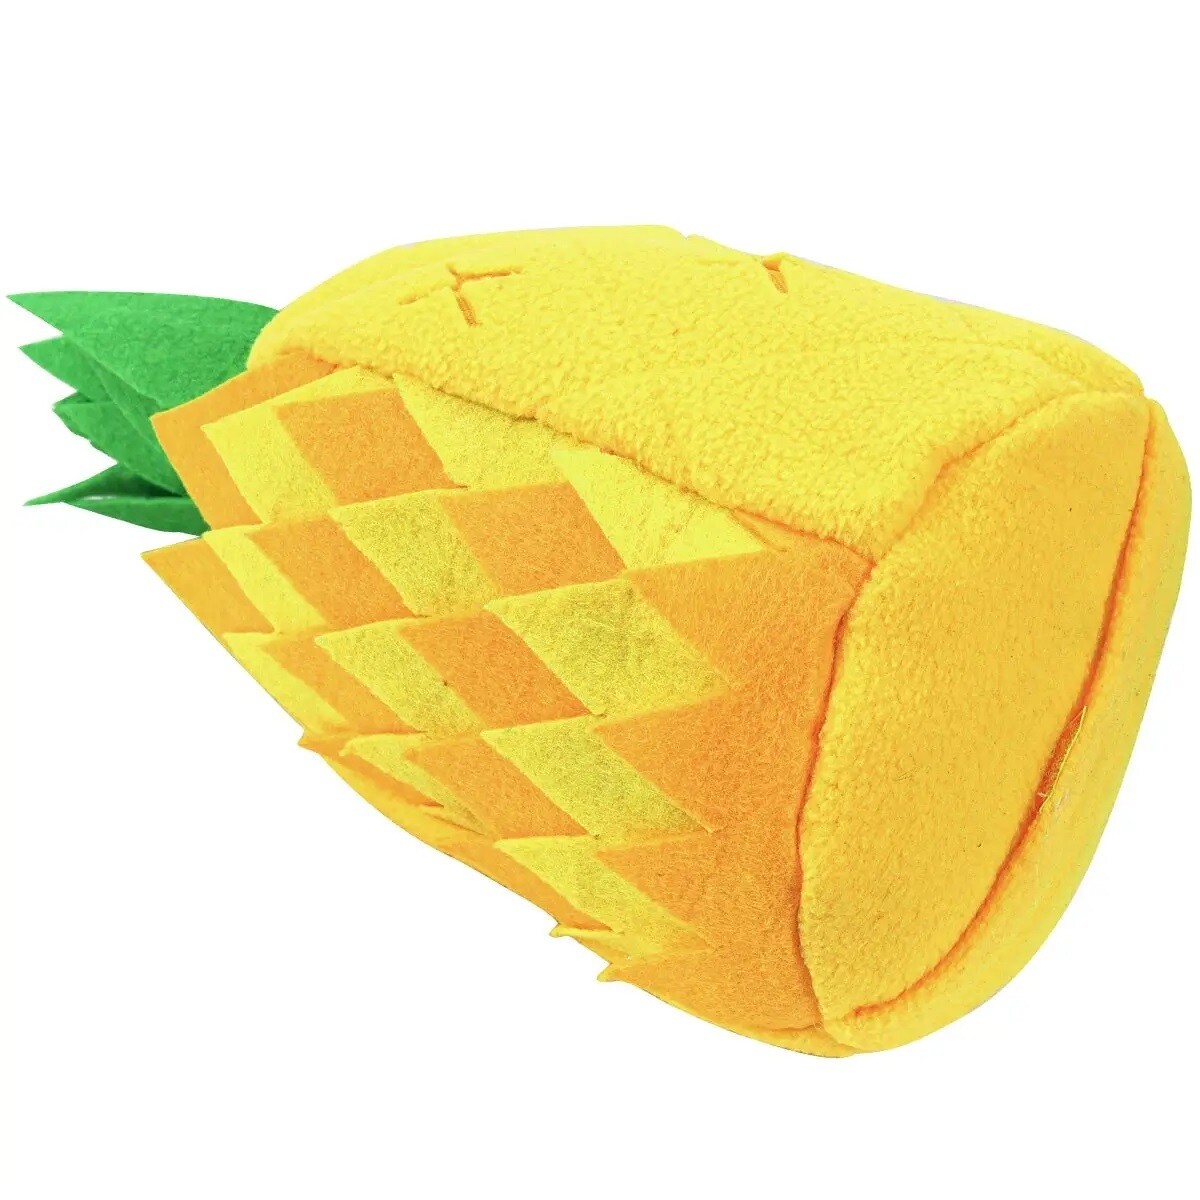 Injoya Pineapple Snuffle Toy